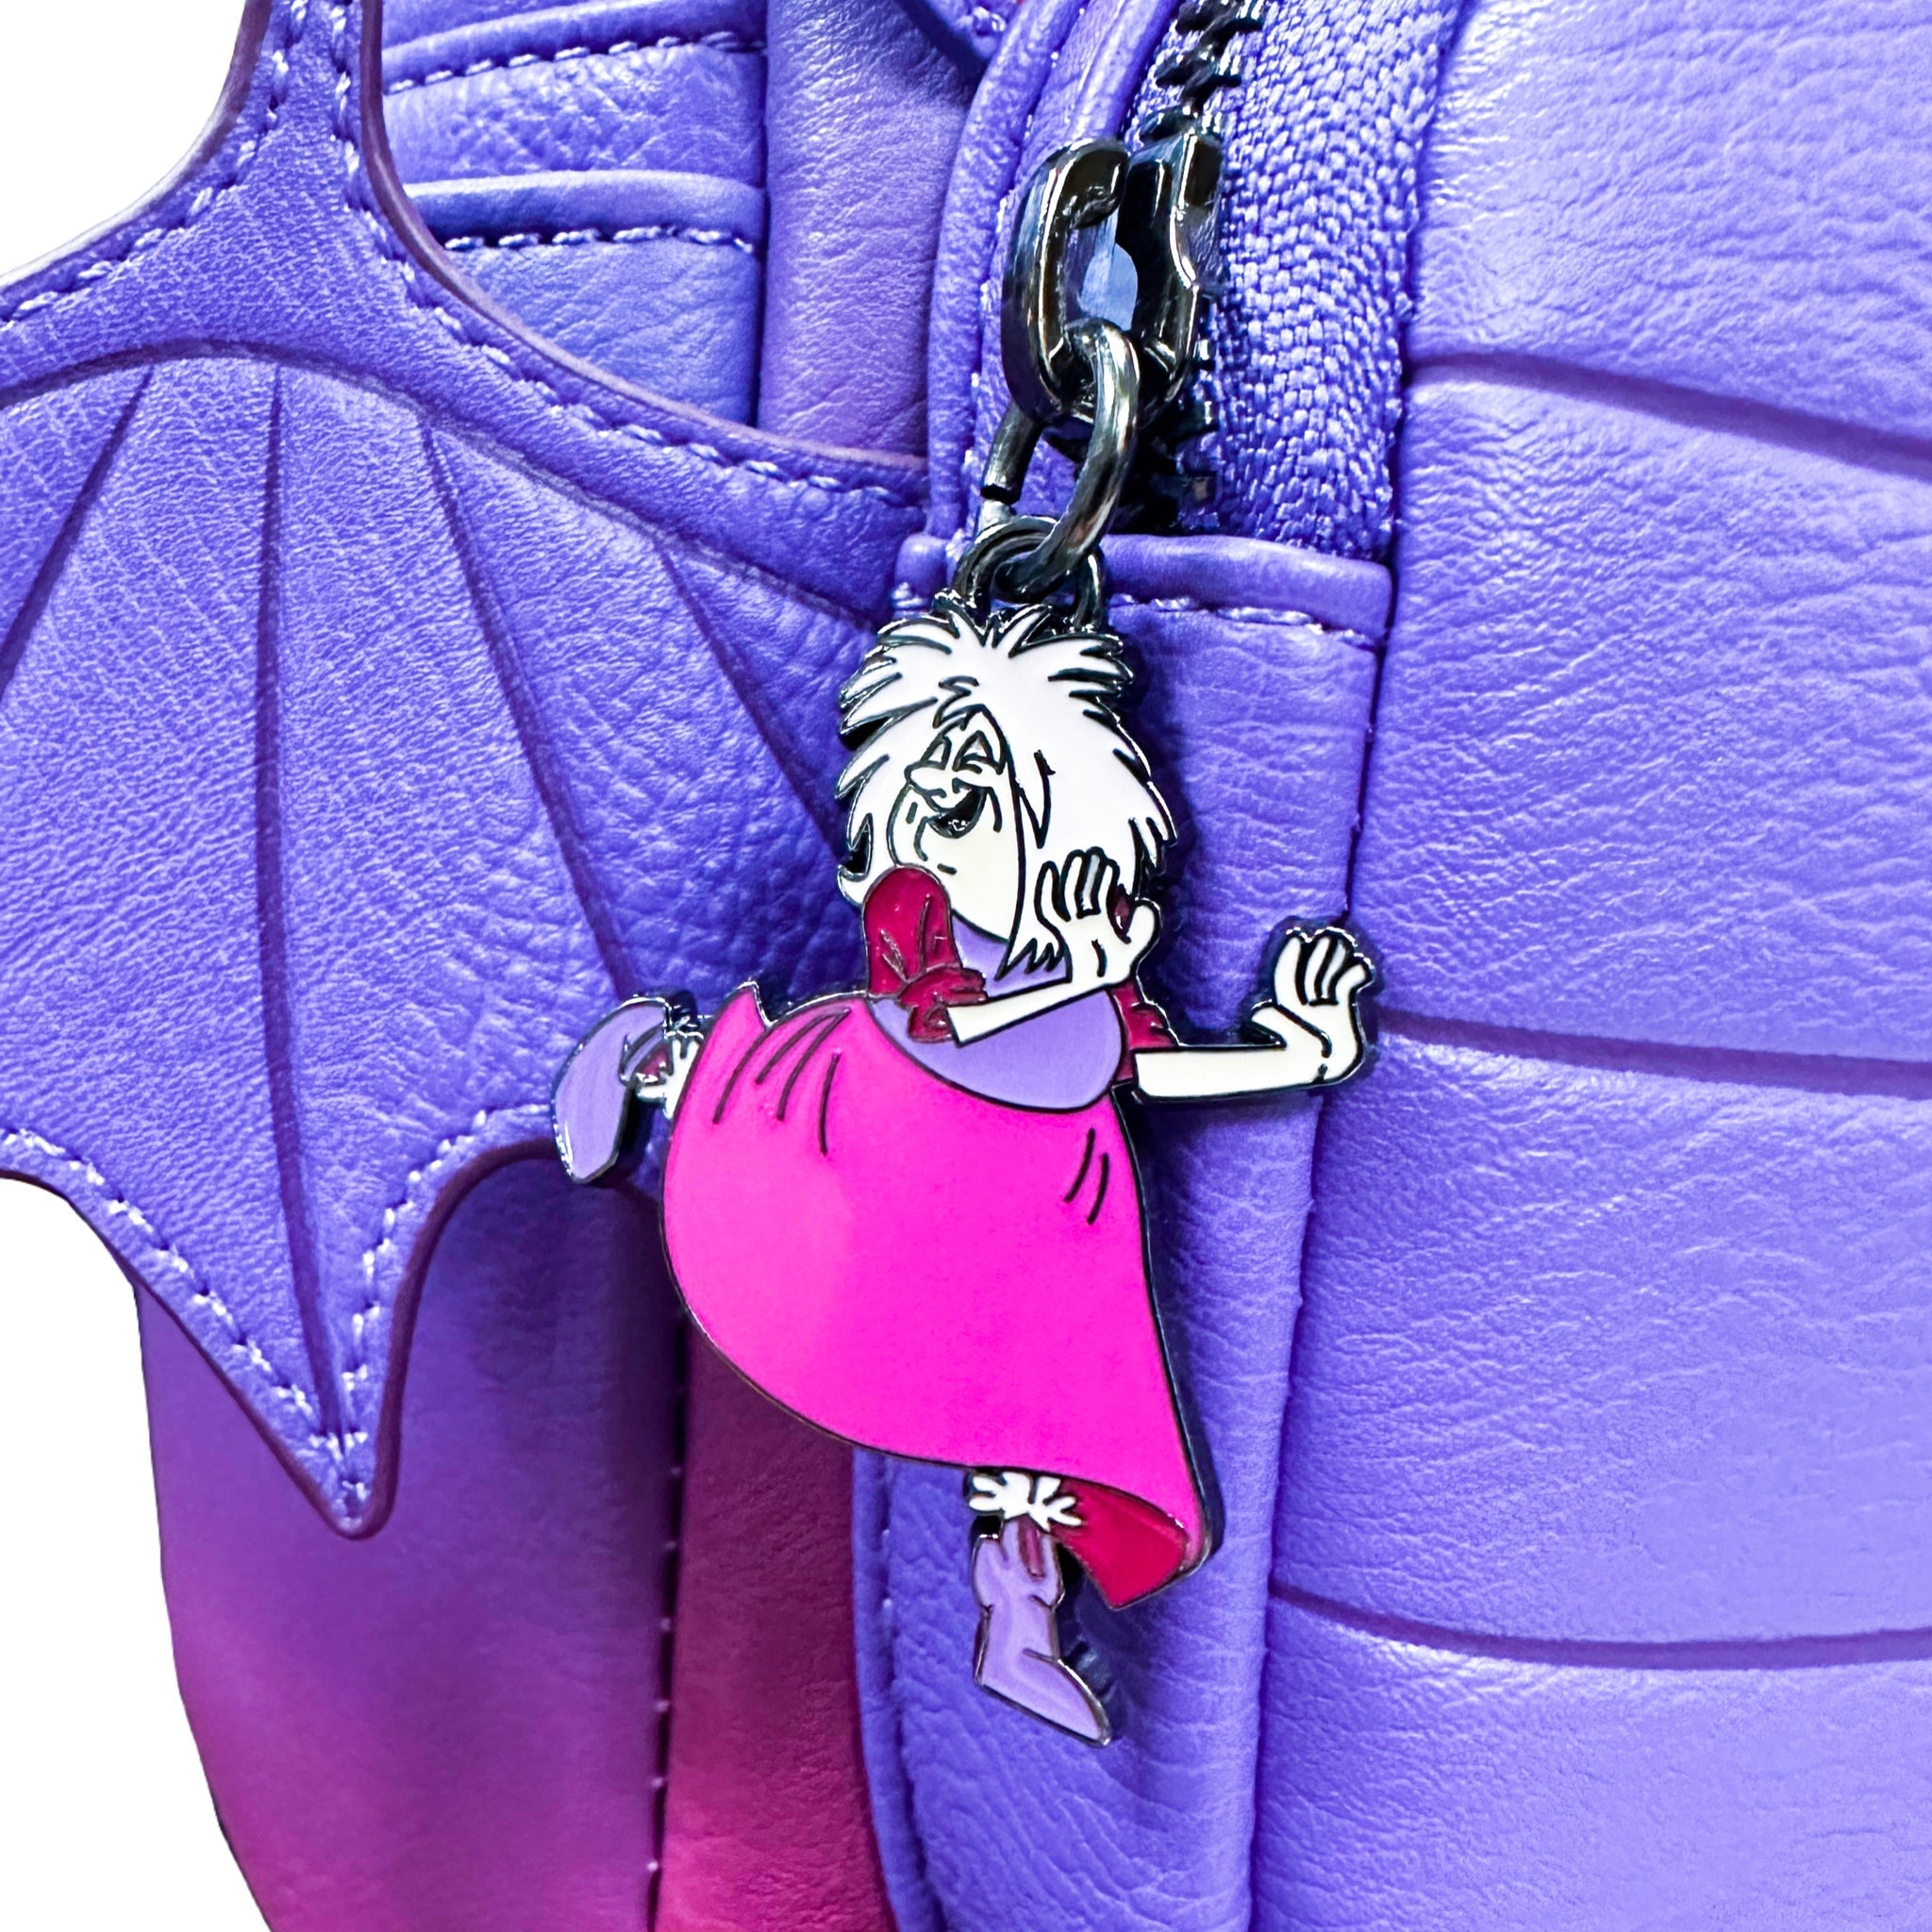 Loungefly - Disney Villain's Flame Mini Backpack